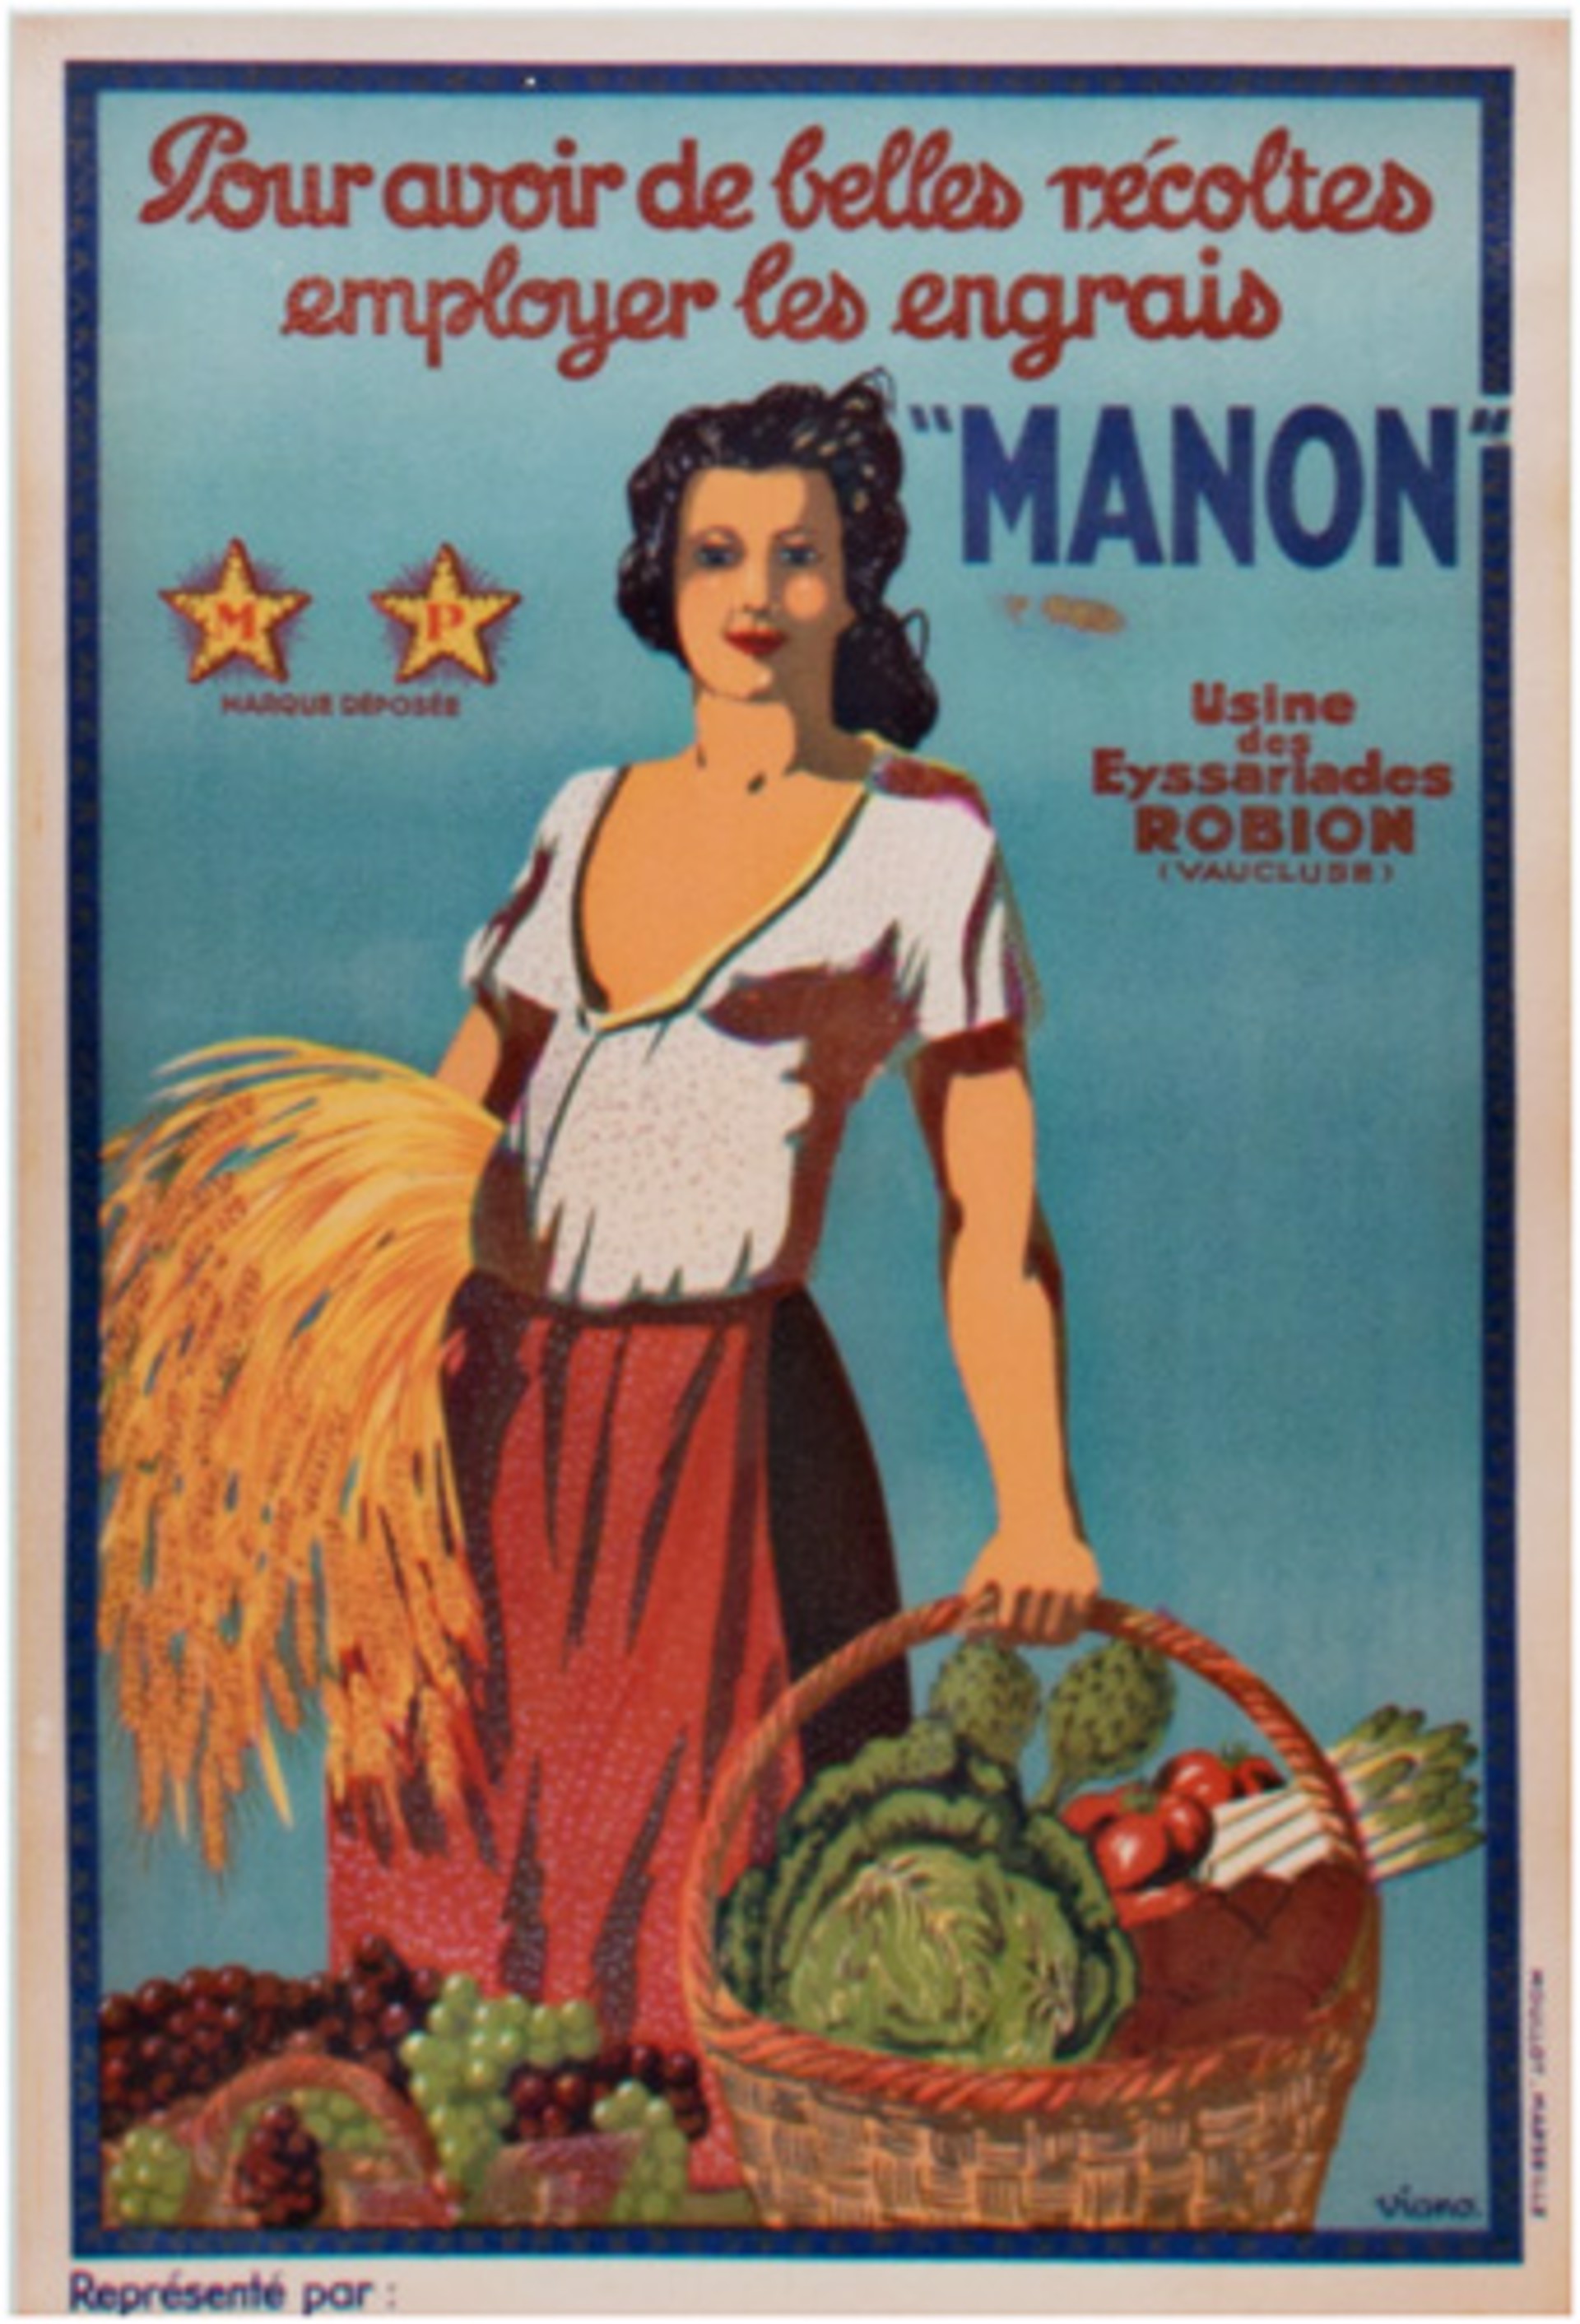 Manon by Viana